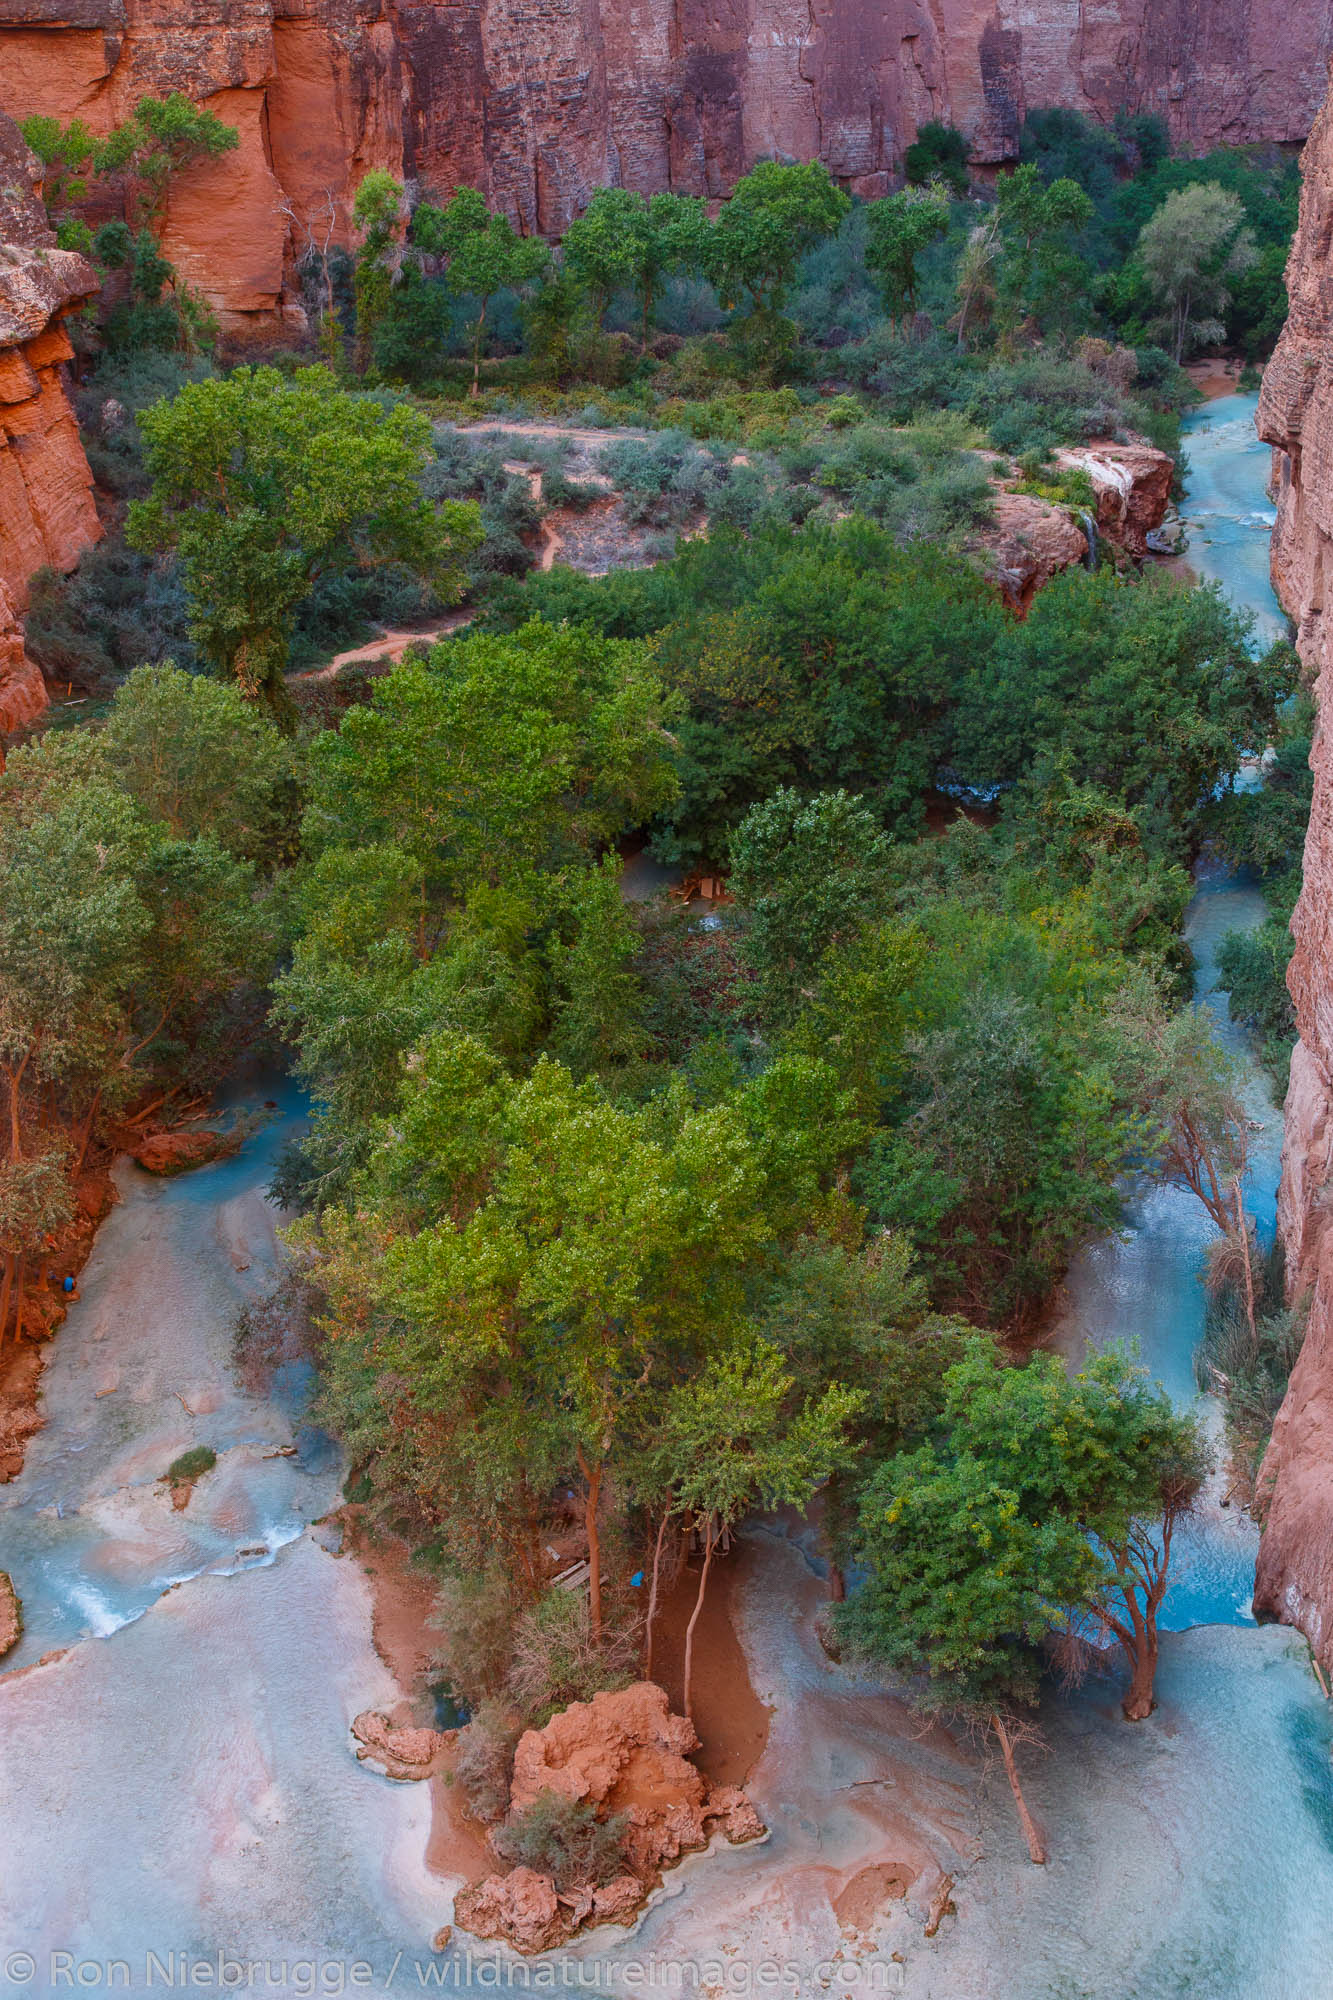 Mooney Falls, Havasupai Indian Reservation, Grand Canyon, Arizona.